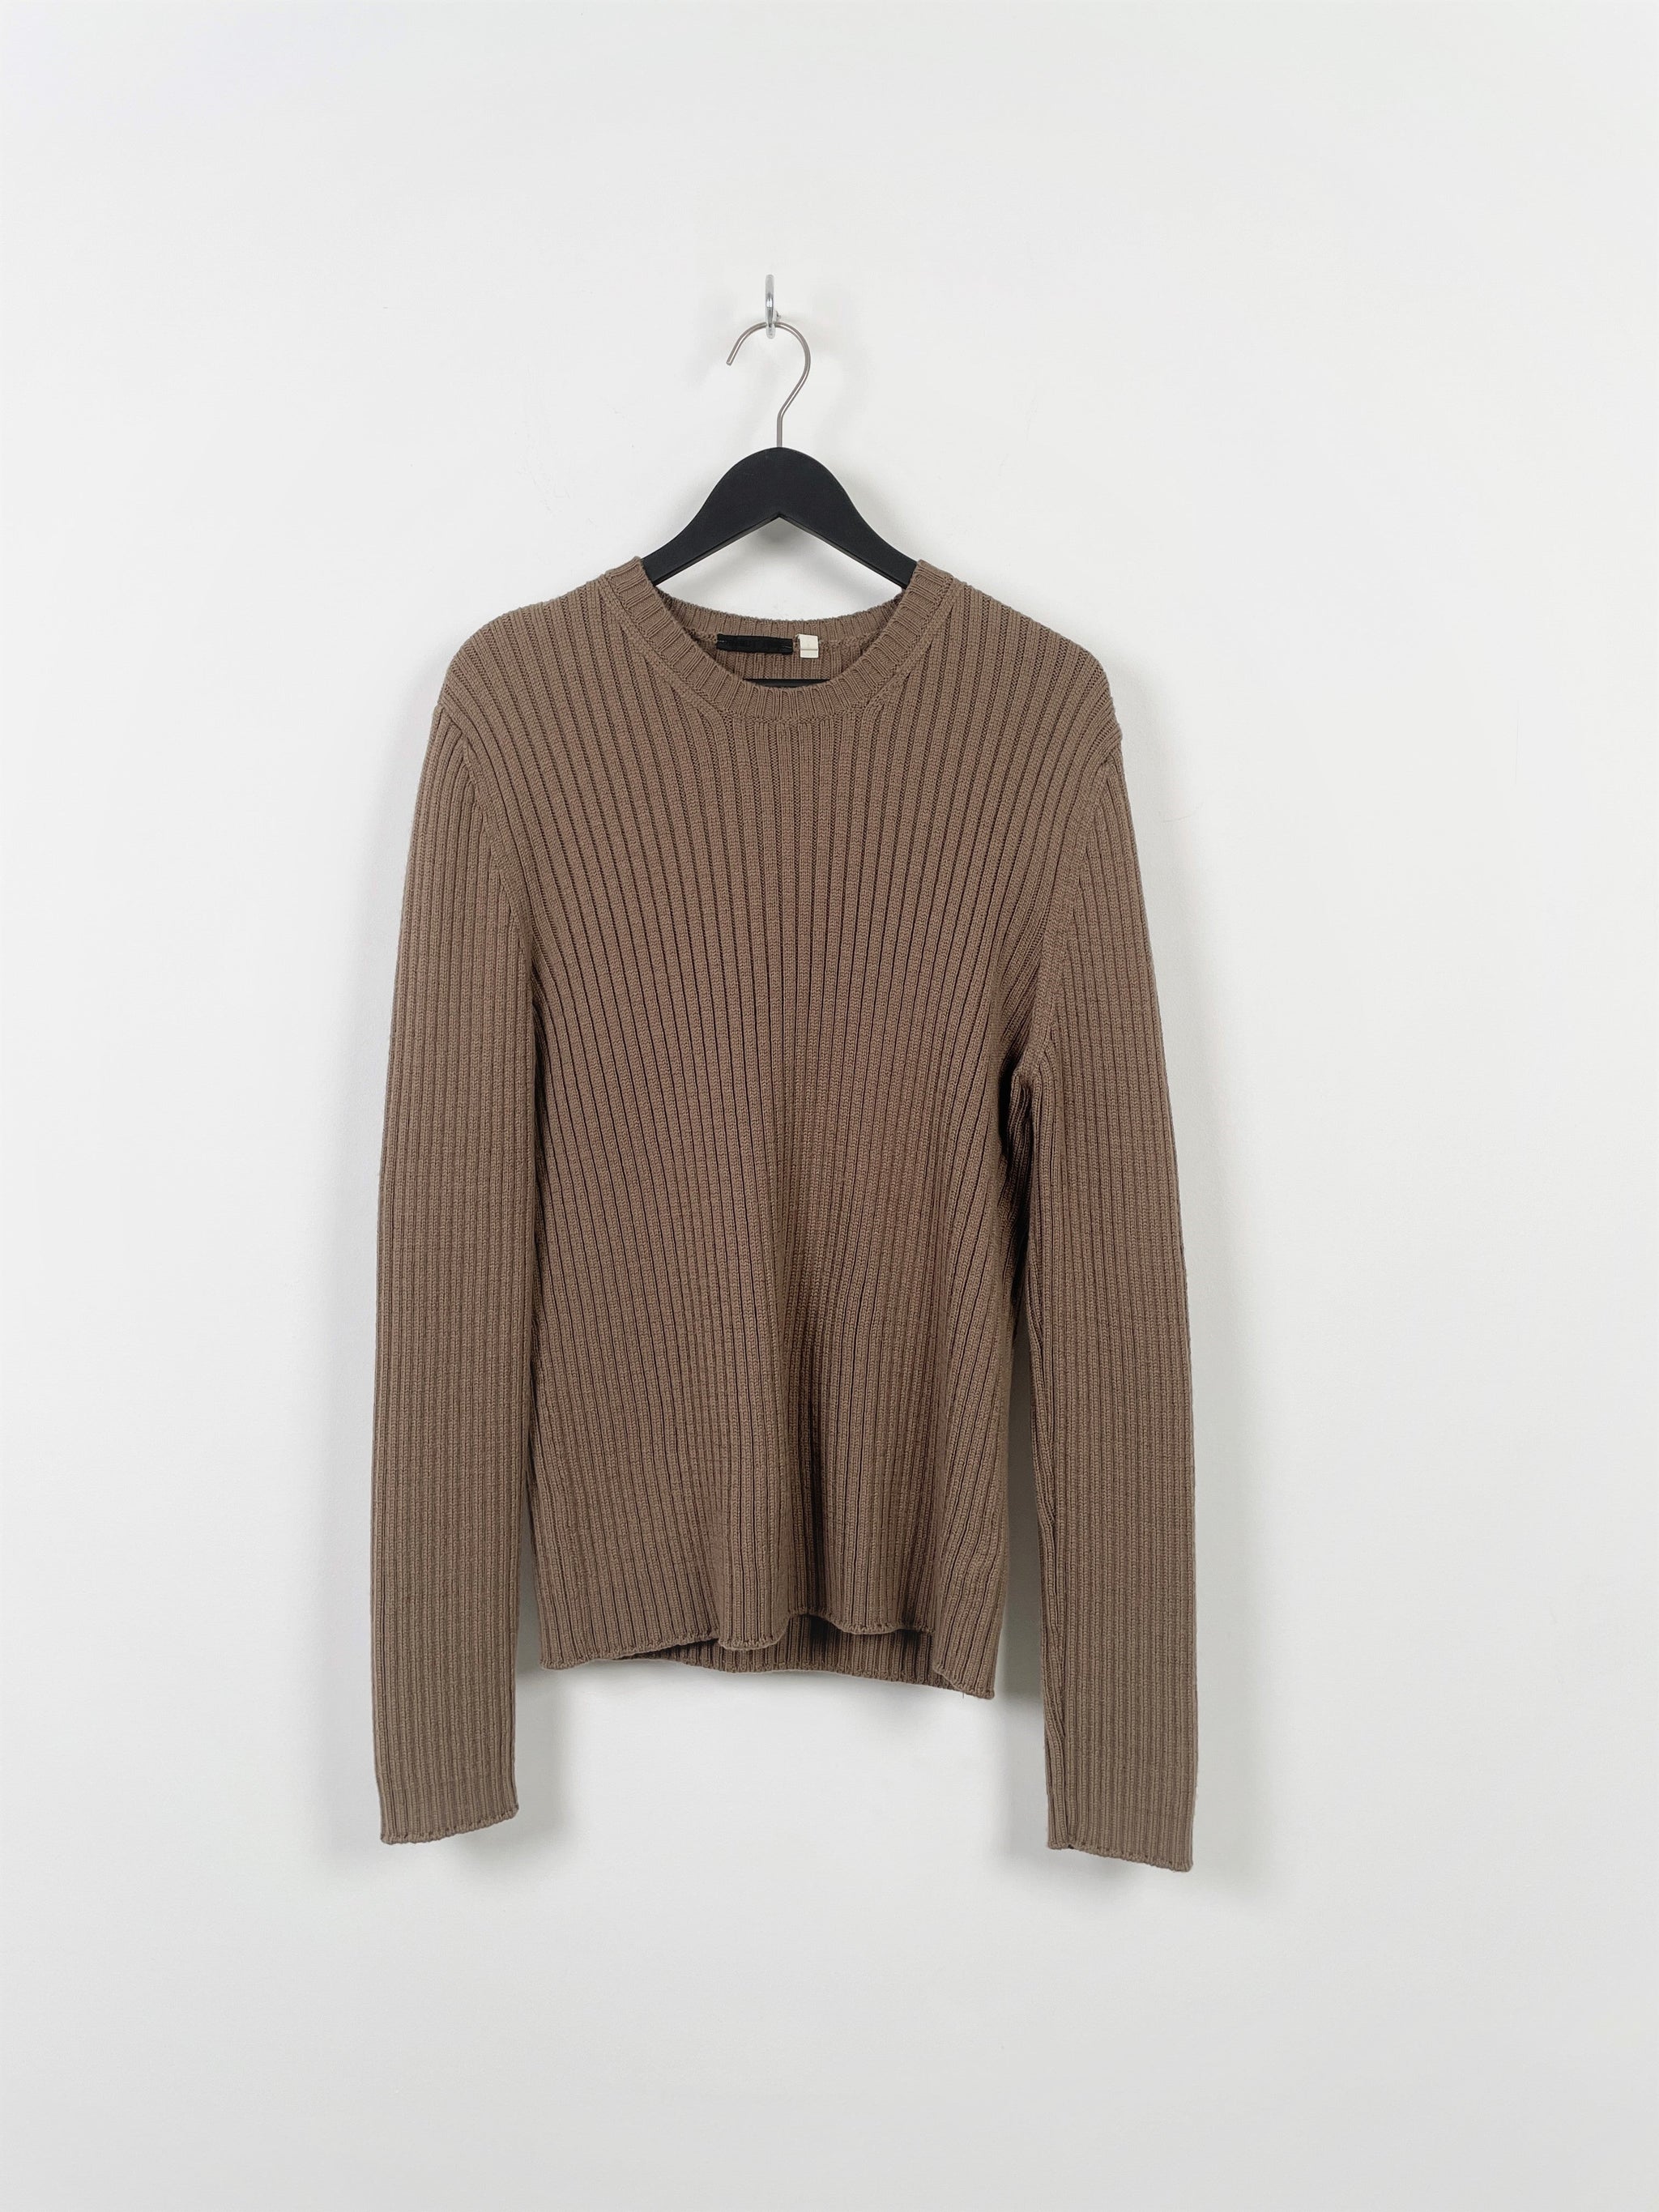 Helmut Lang Archive 2000 Ribbed Knit Crewneck Sweater | FAULKNER